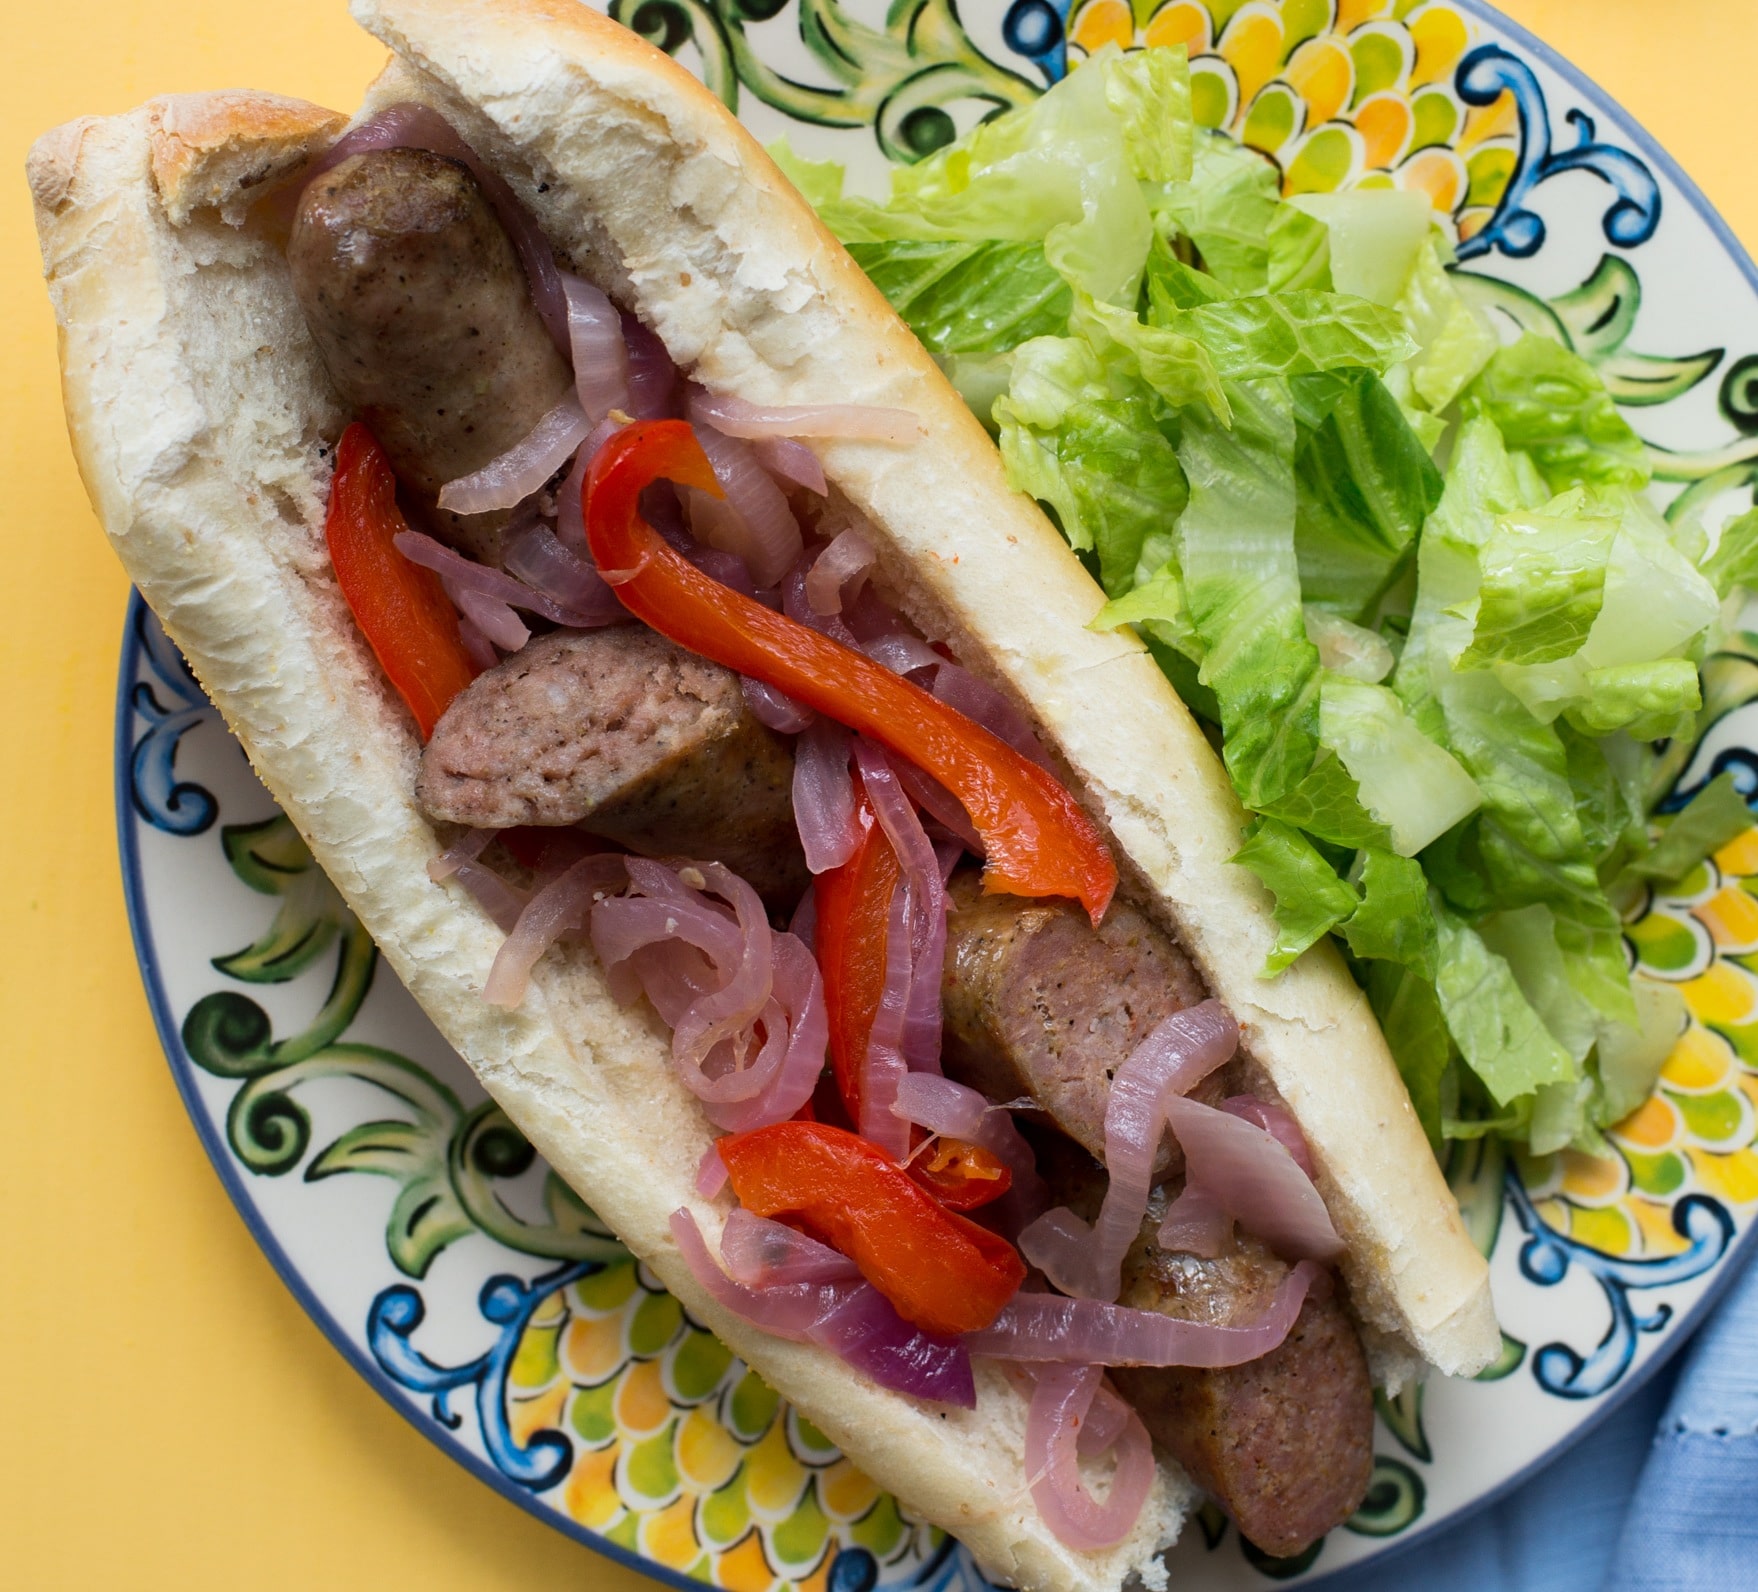 Sausage, Onions and Pepper Sub Sandwich / Sarah Crowder / Katie Workman / themom100.com